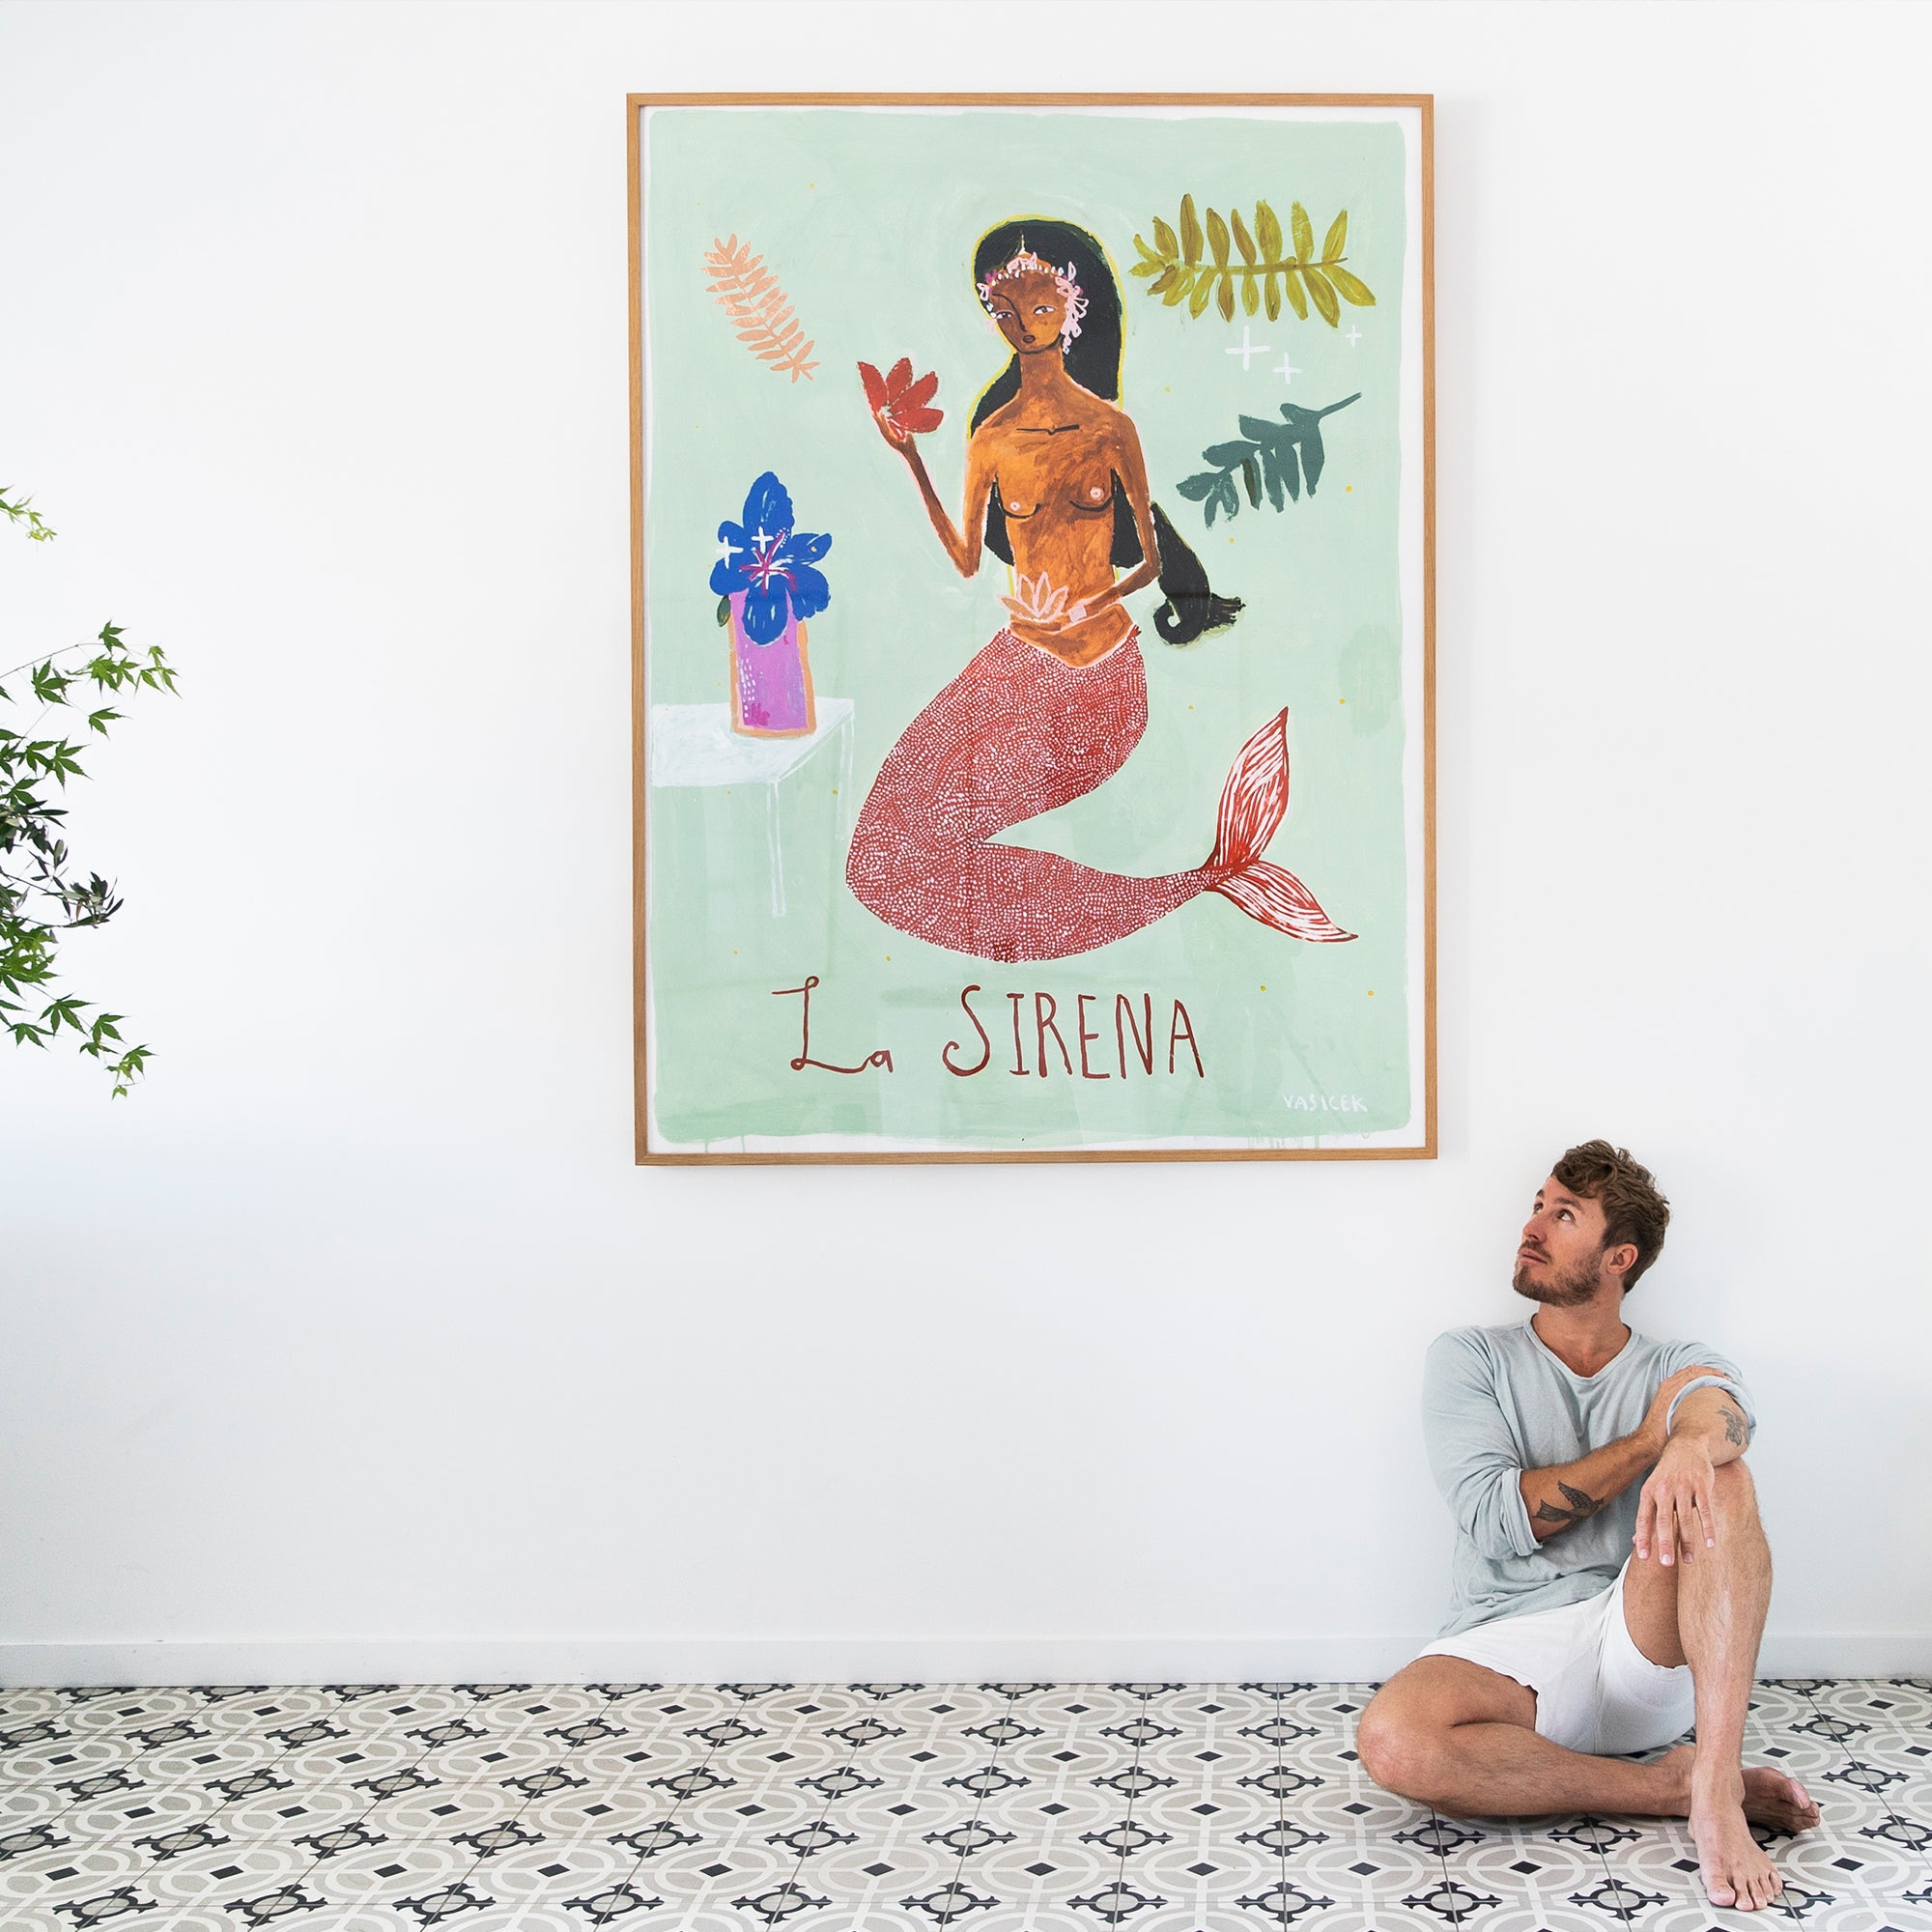 LA SIRENA - Prints Charming